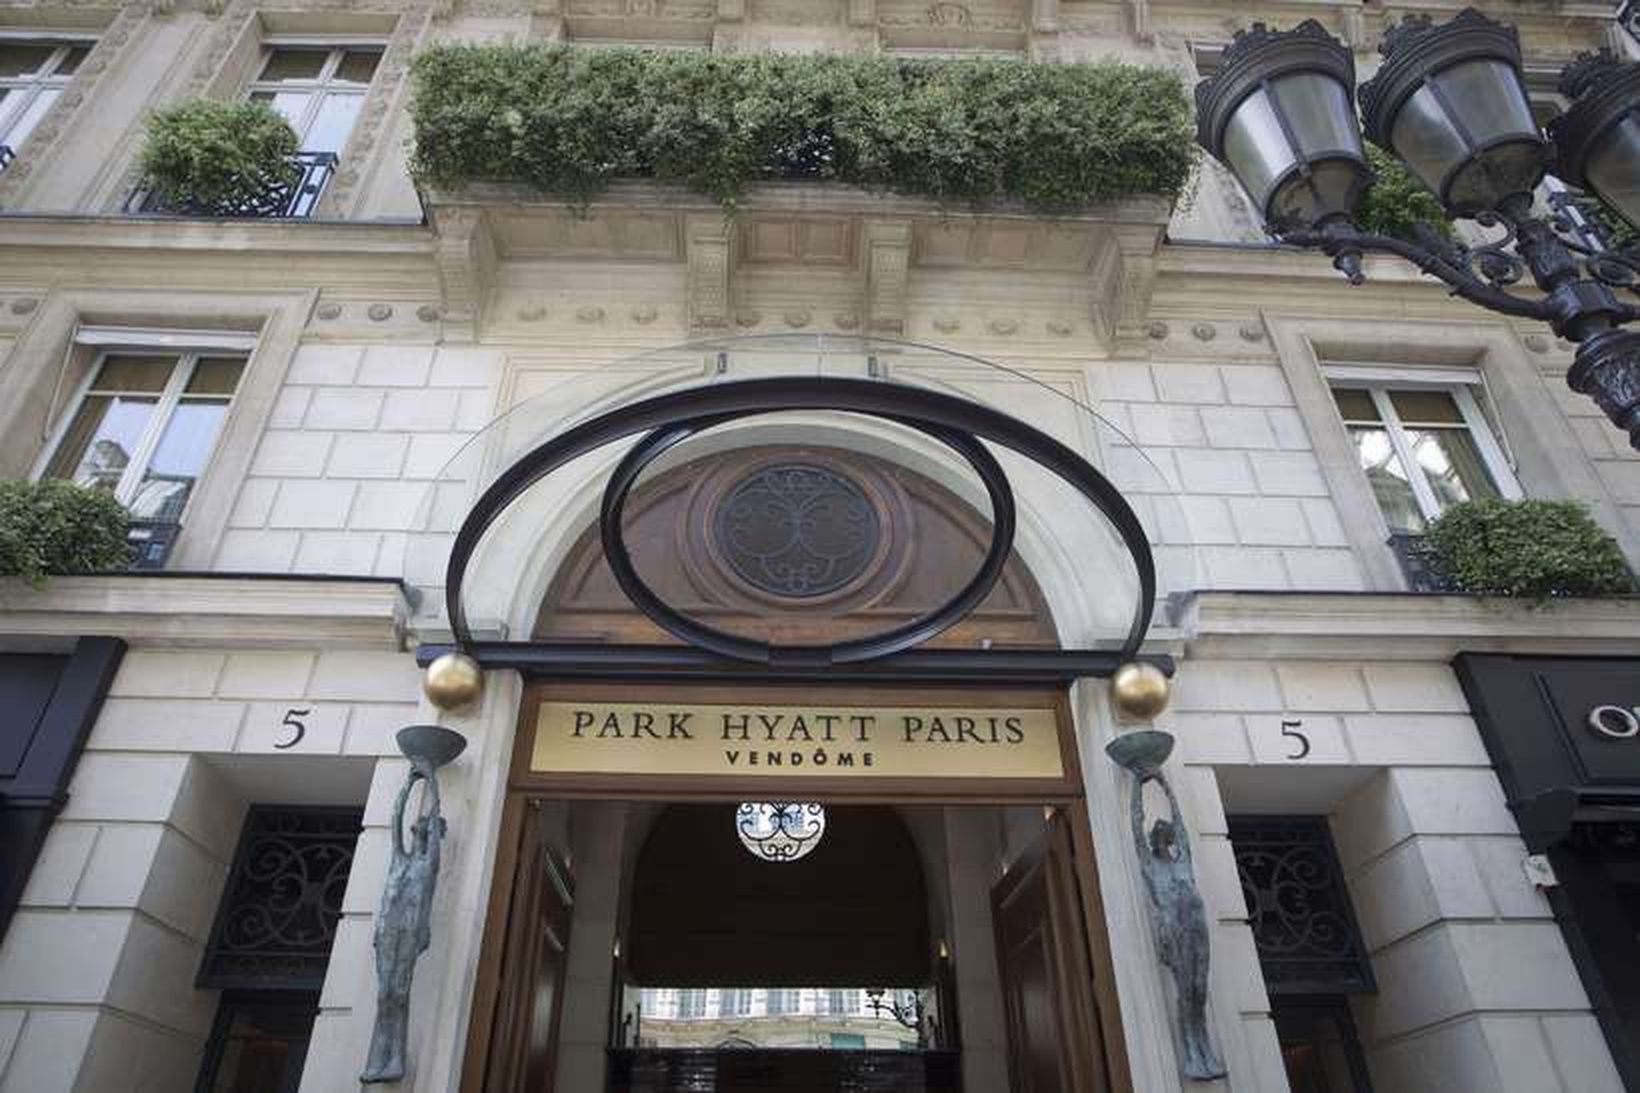 Park Hyatt Paris-Vendome.